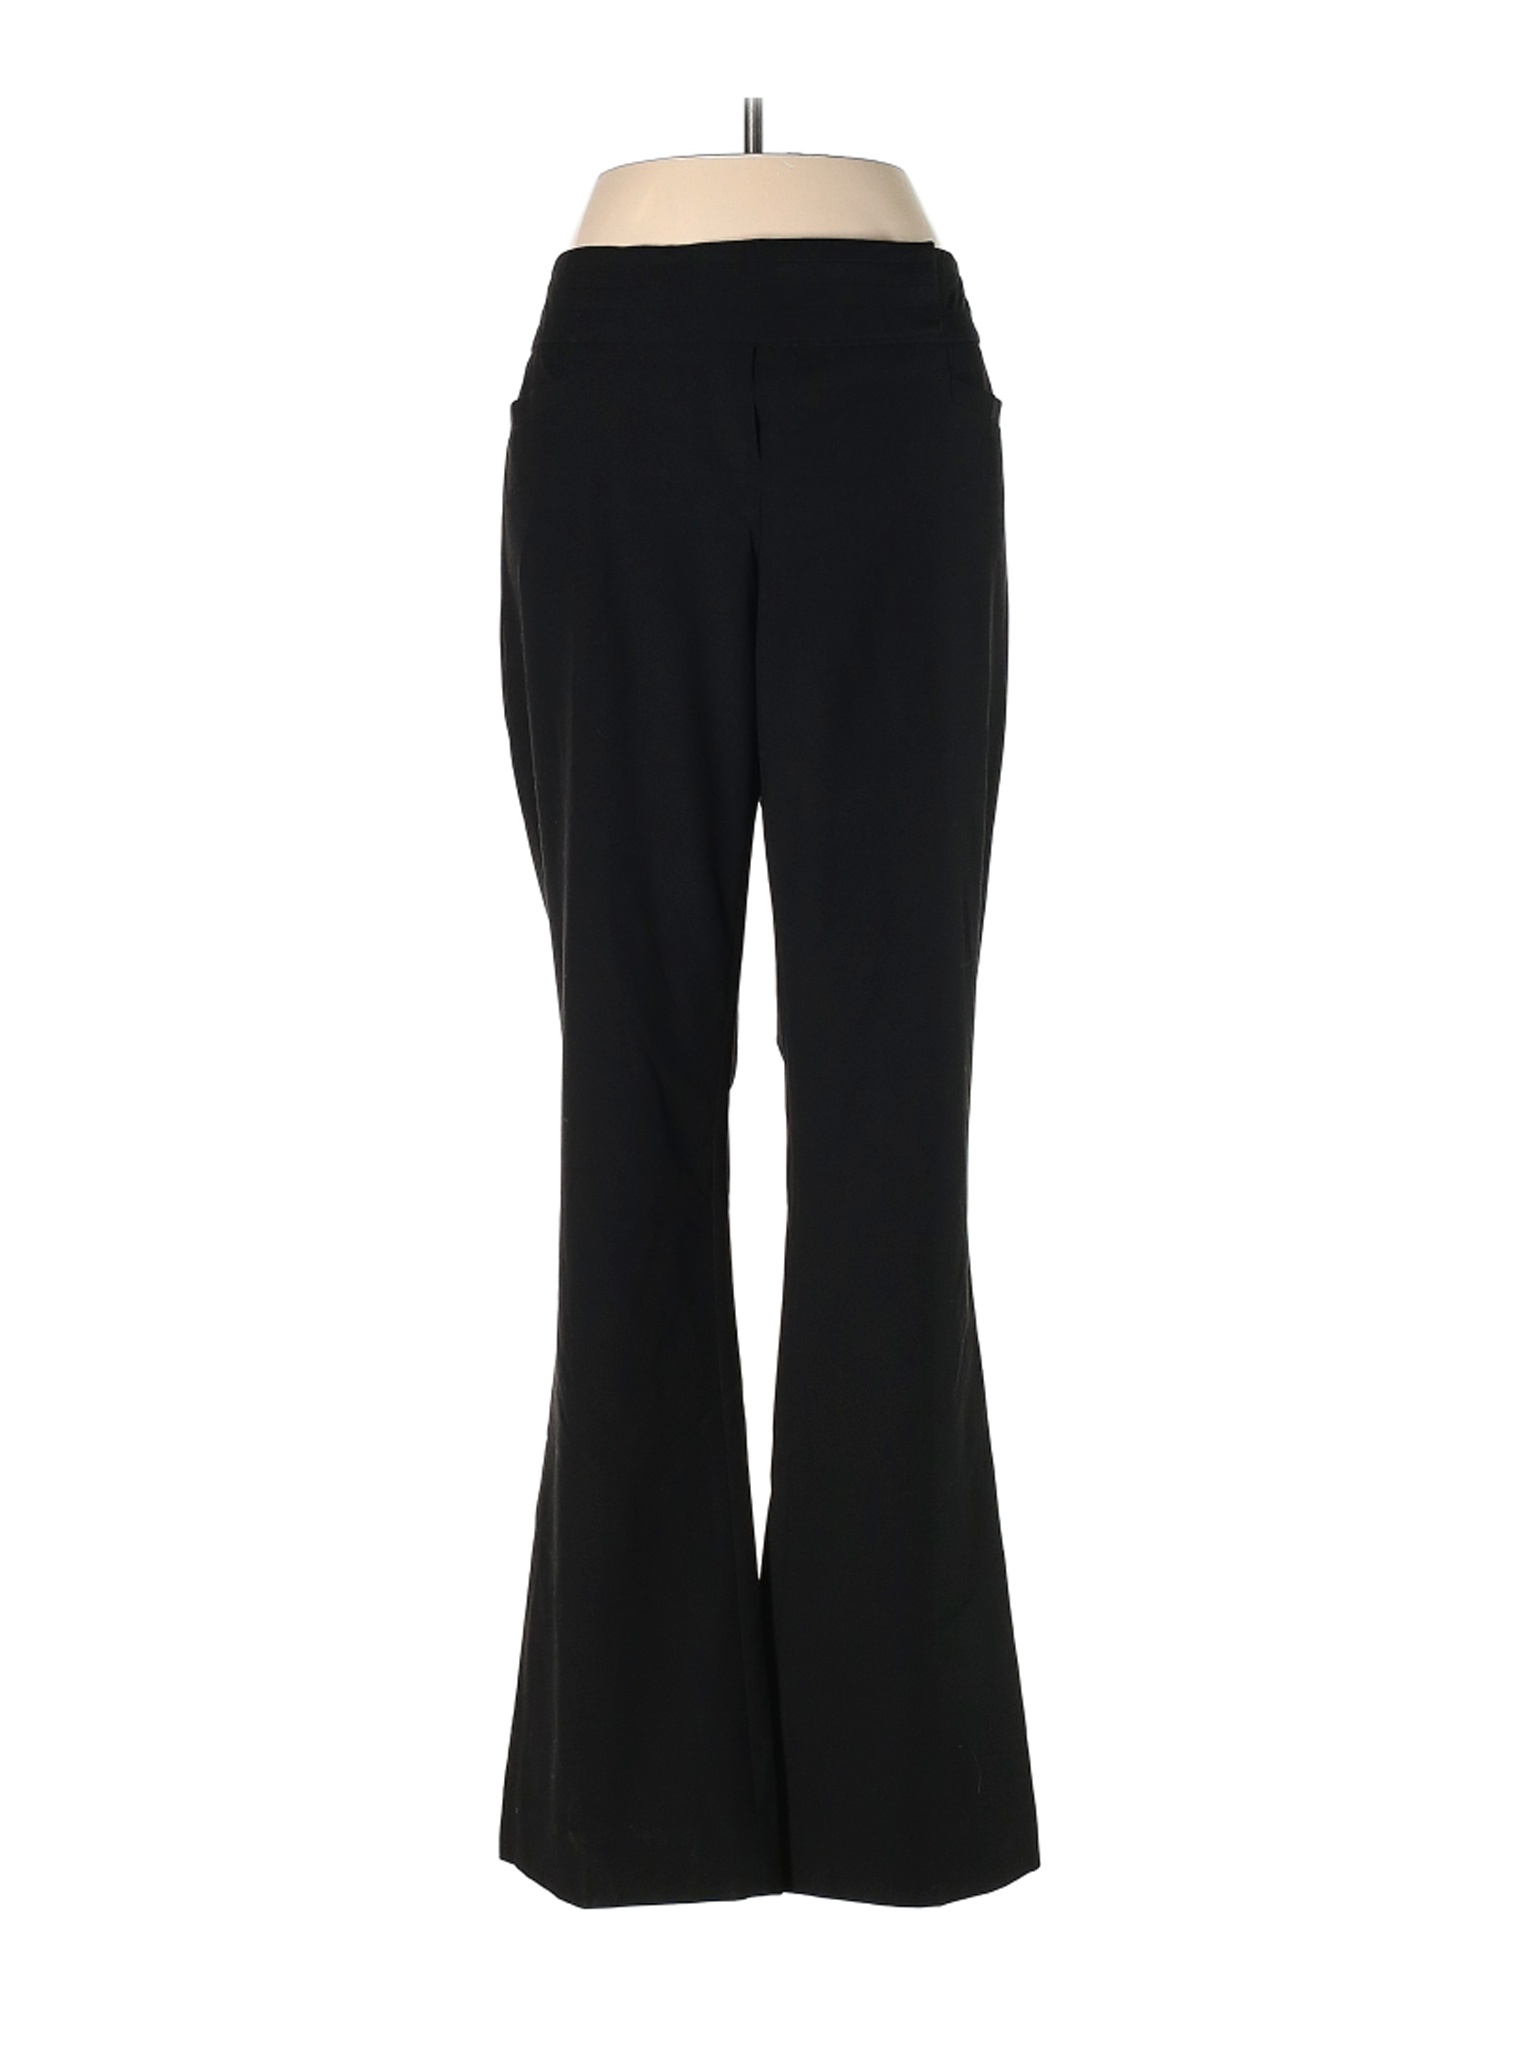 The Limited Women Black Dress Pants 8 | eBay